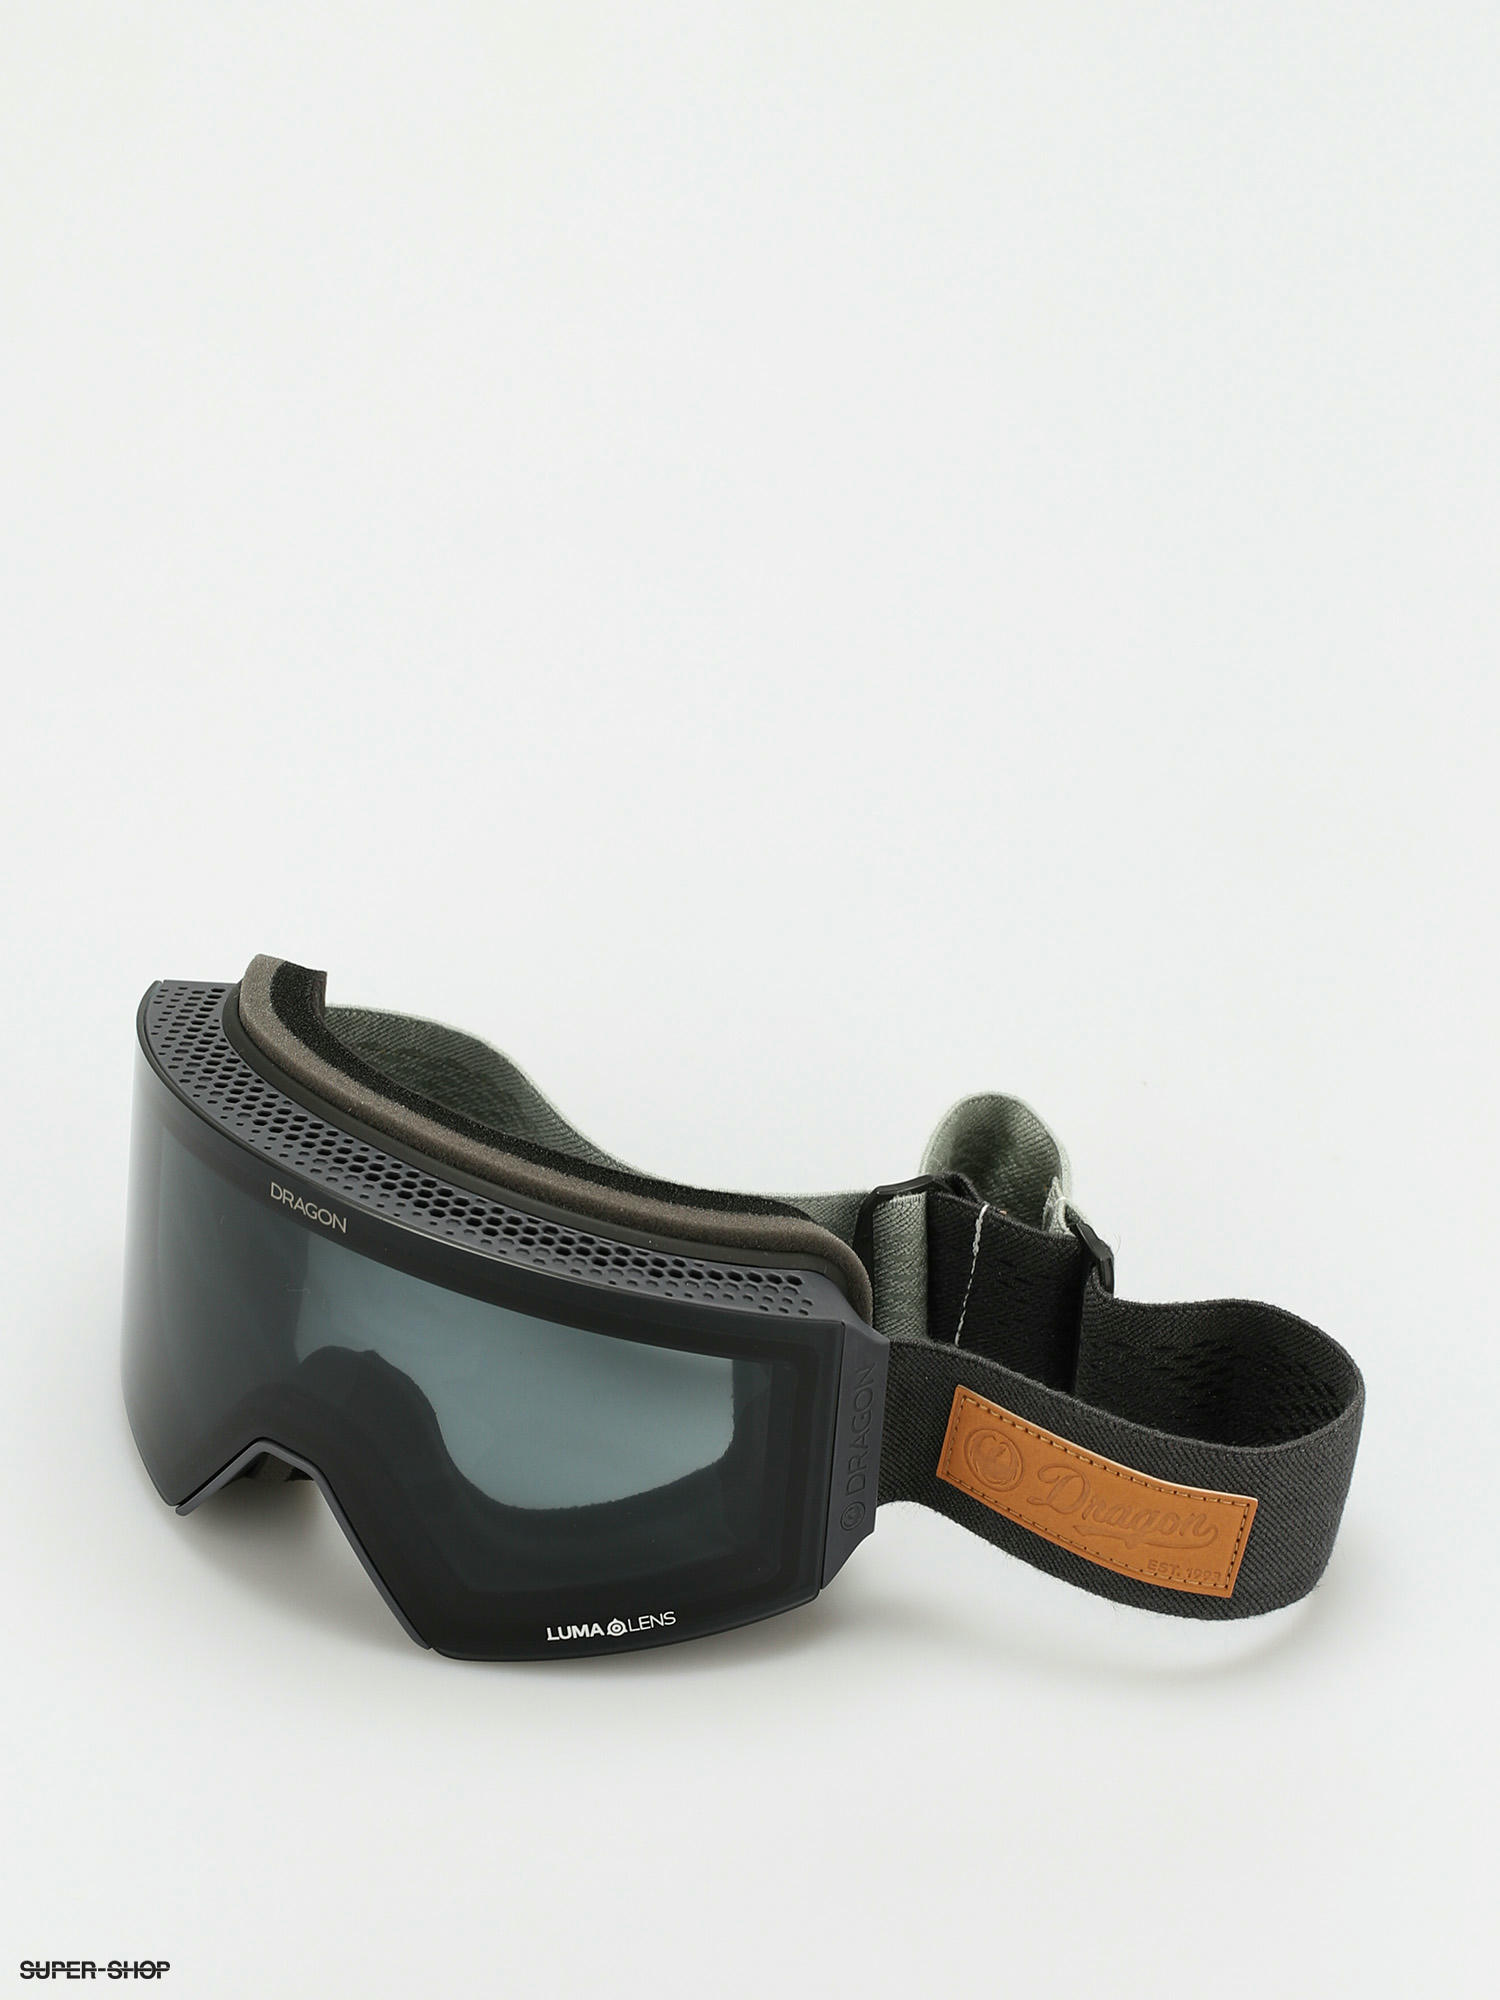 Snowboard goggles - Sale | SUPER-SHOP